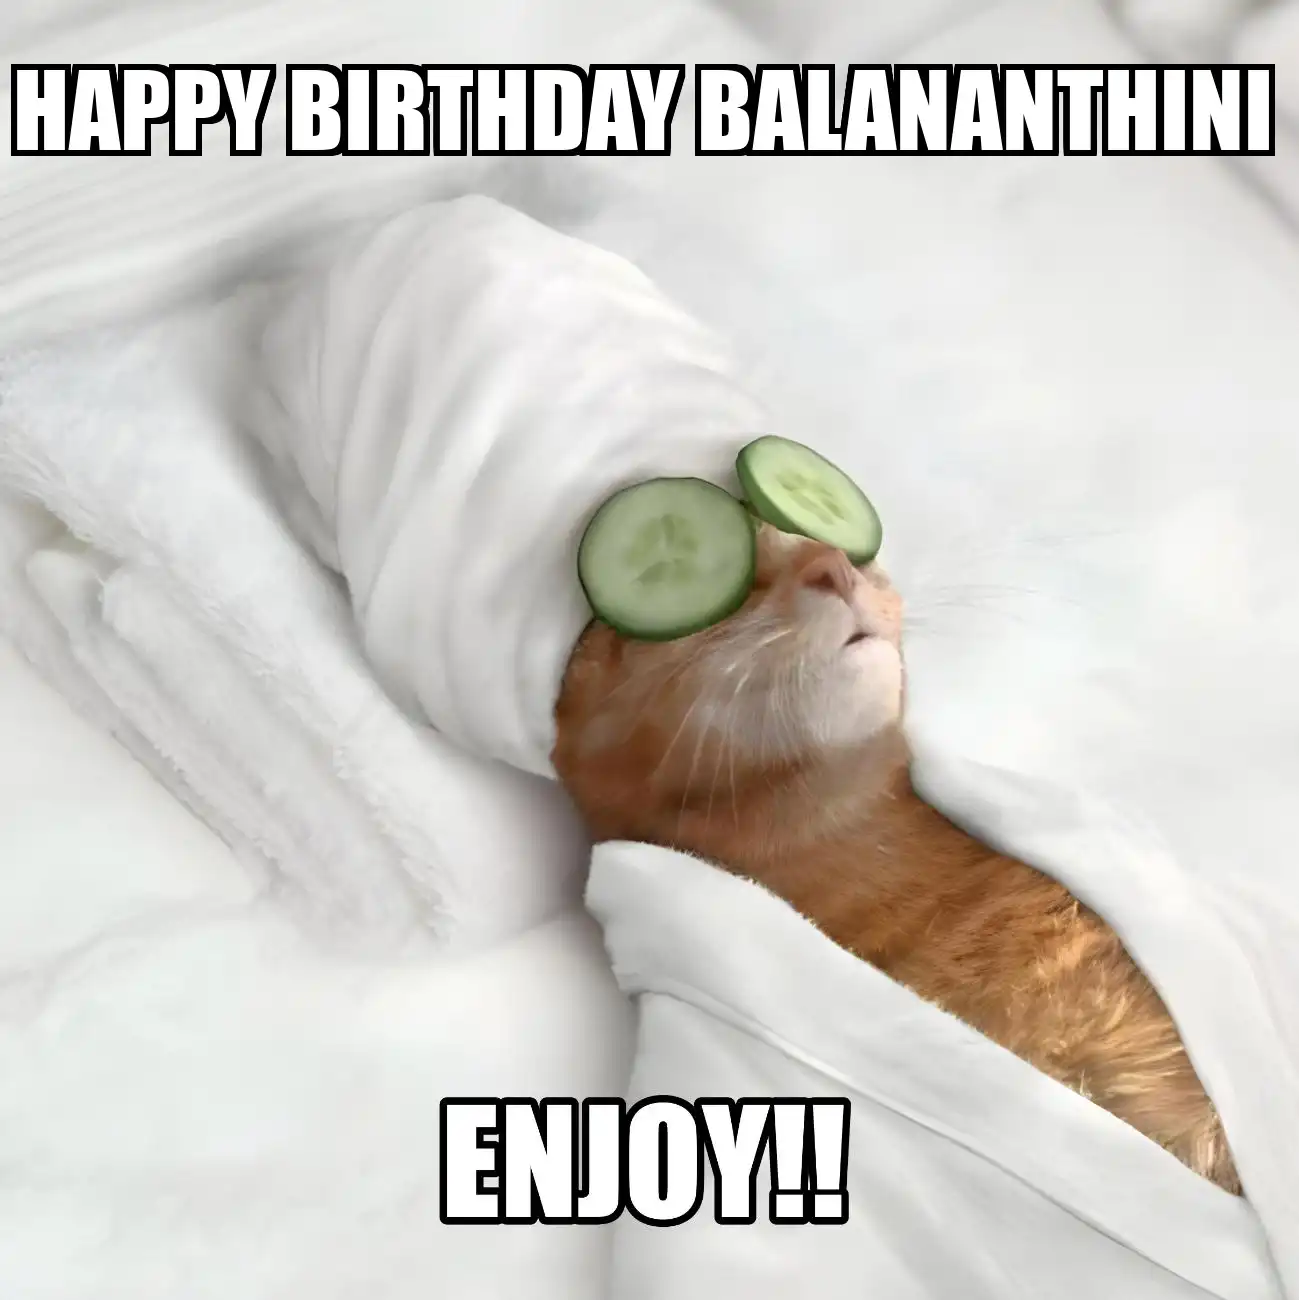 Happy Birthday Balananthini Enjoy Cat Meme